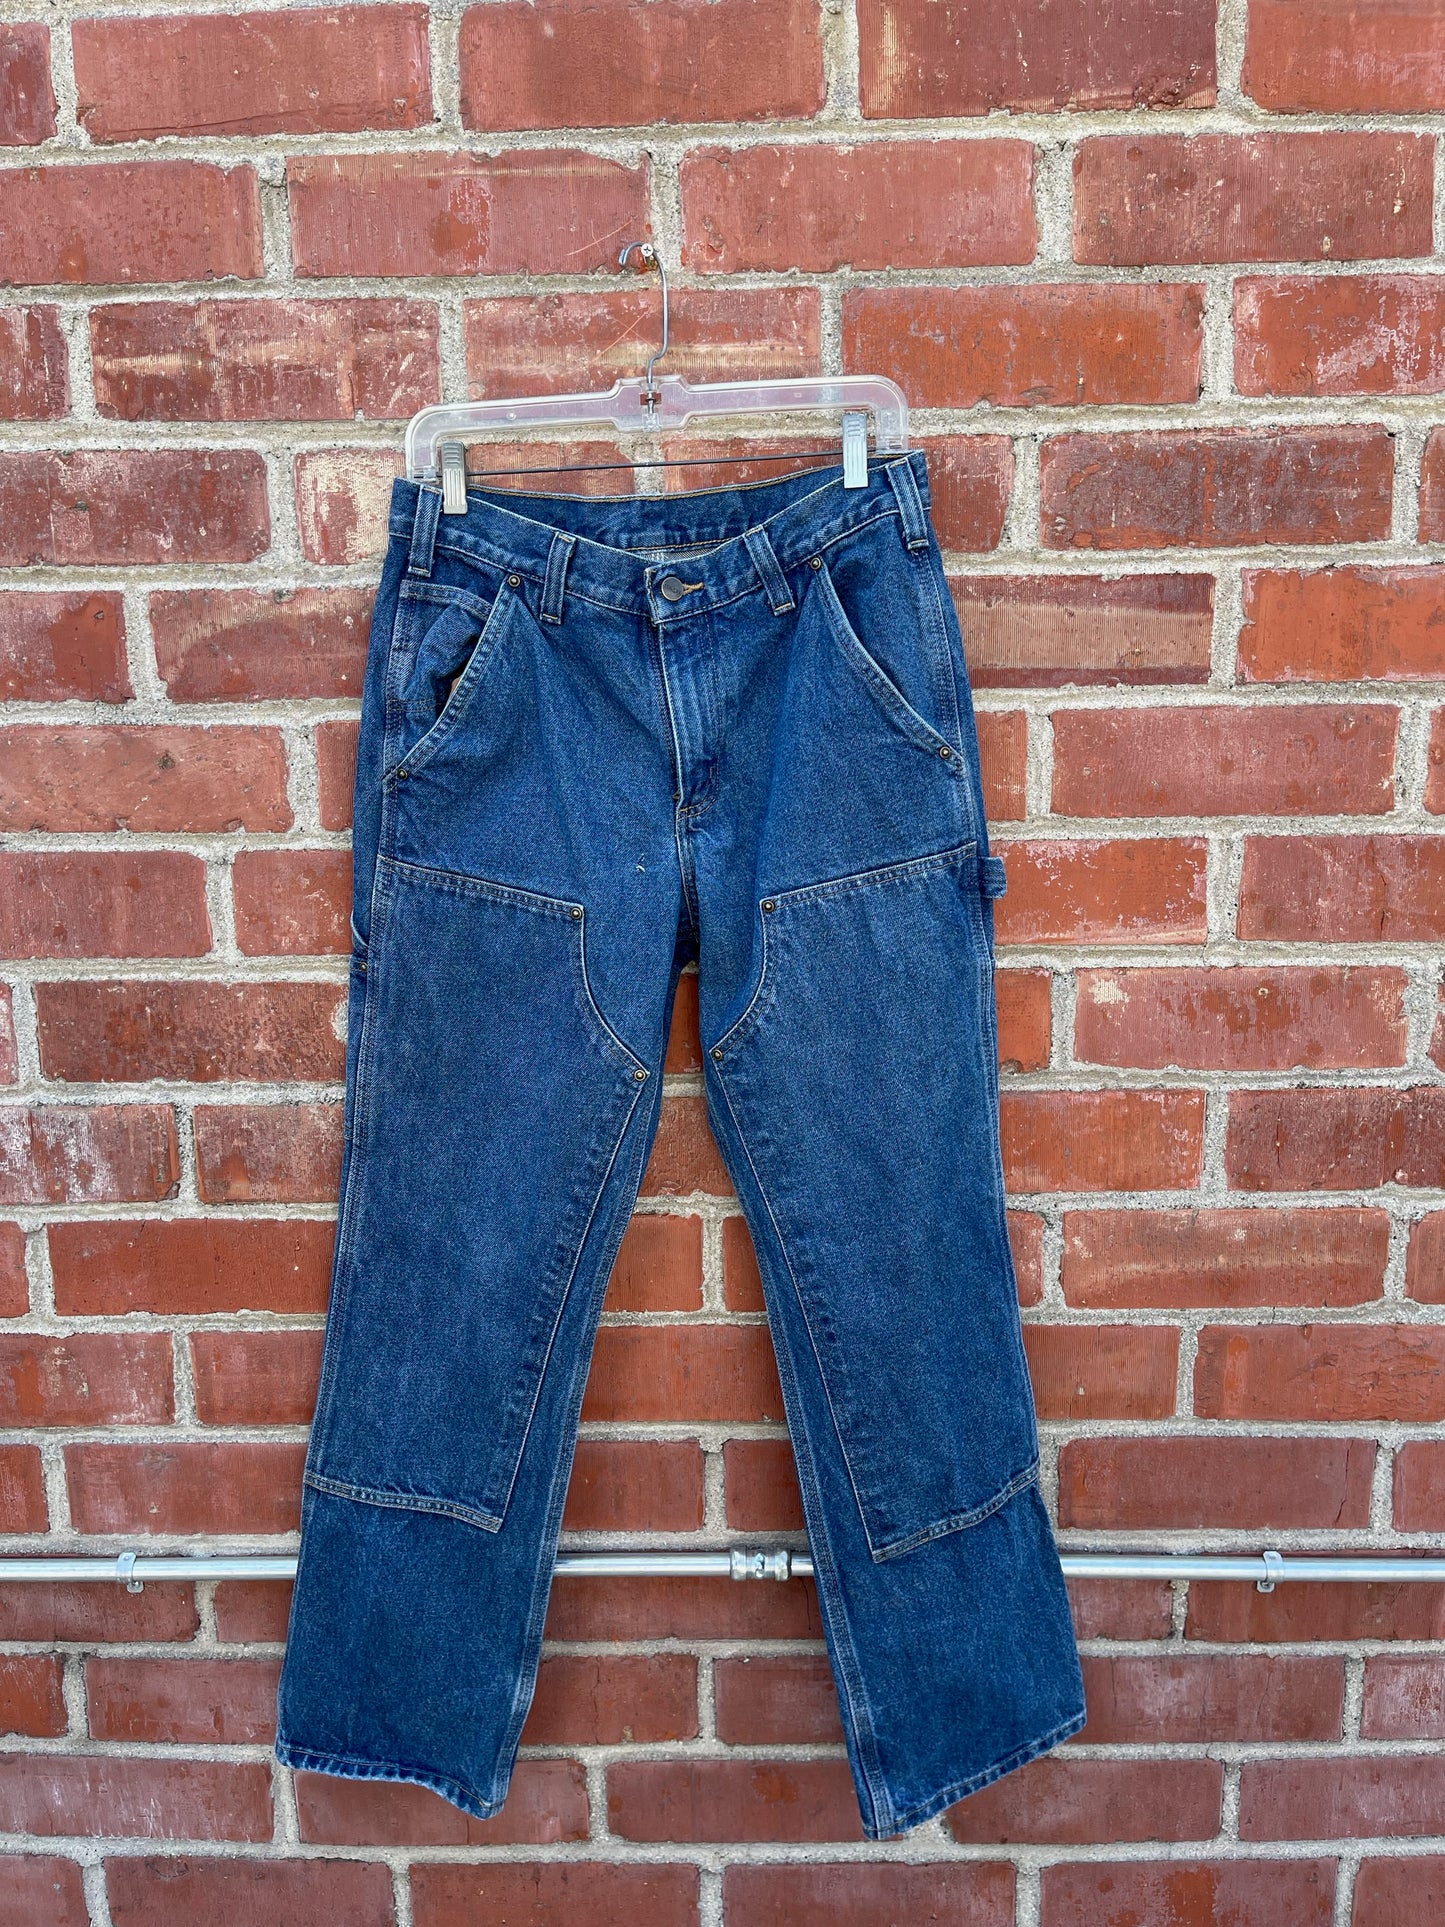 Carhartt Denim Jeans (Dark Wash 6)